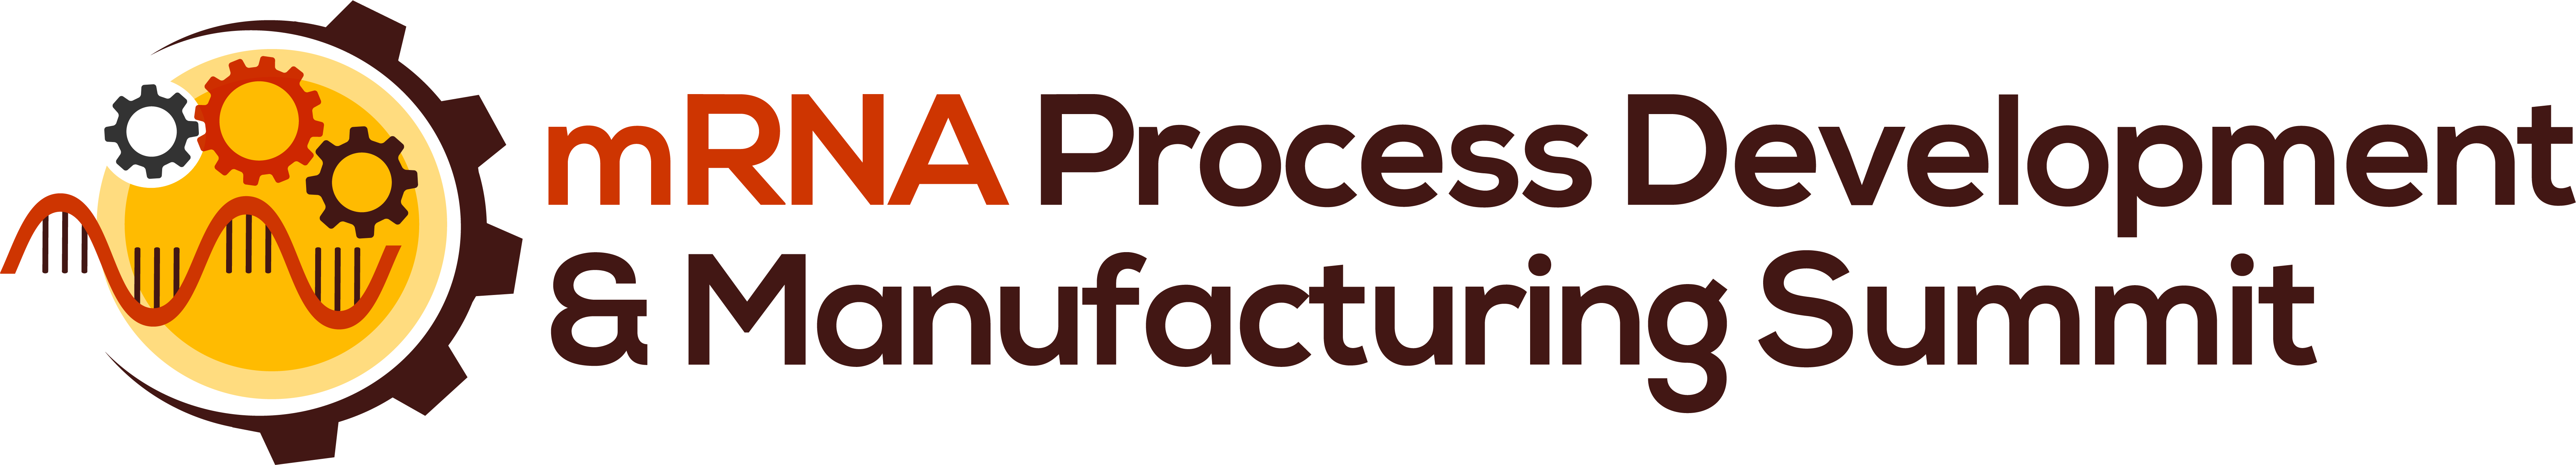 mRNA Process & Manufacturing Summit logo